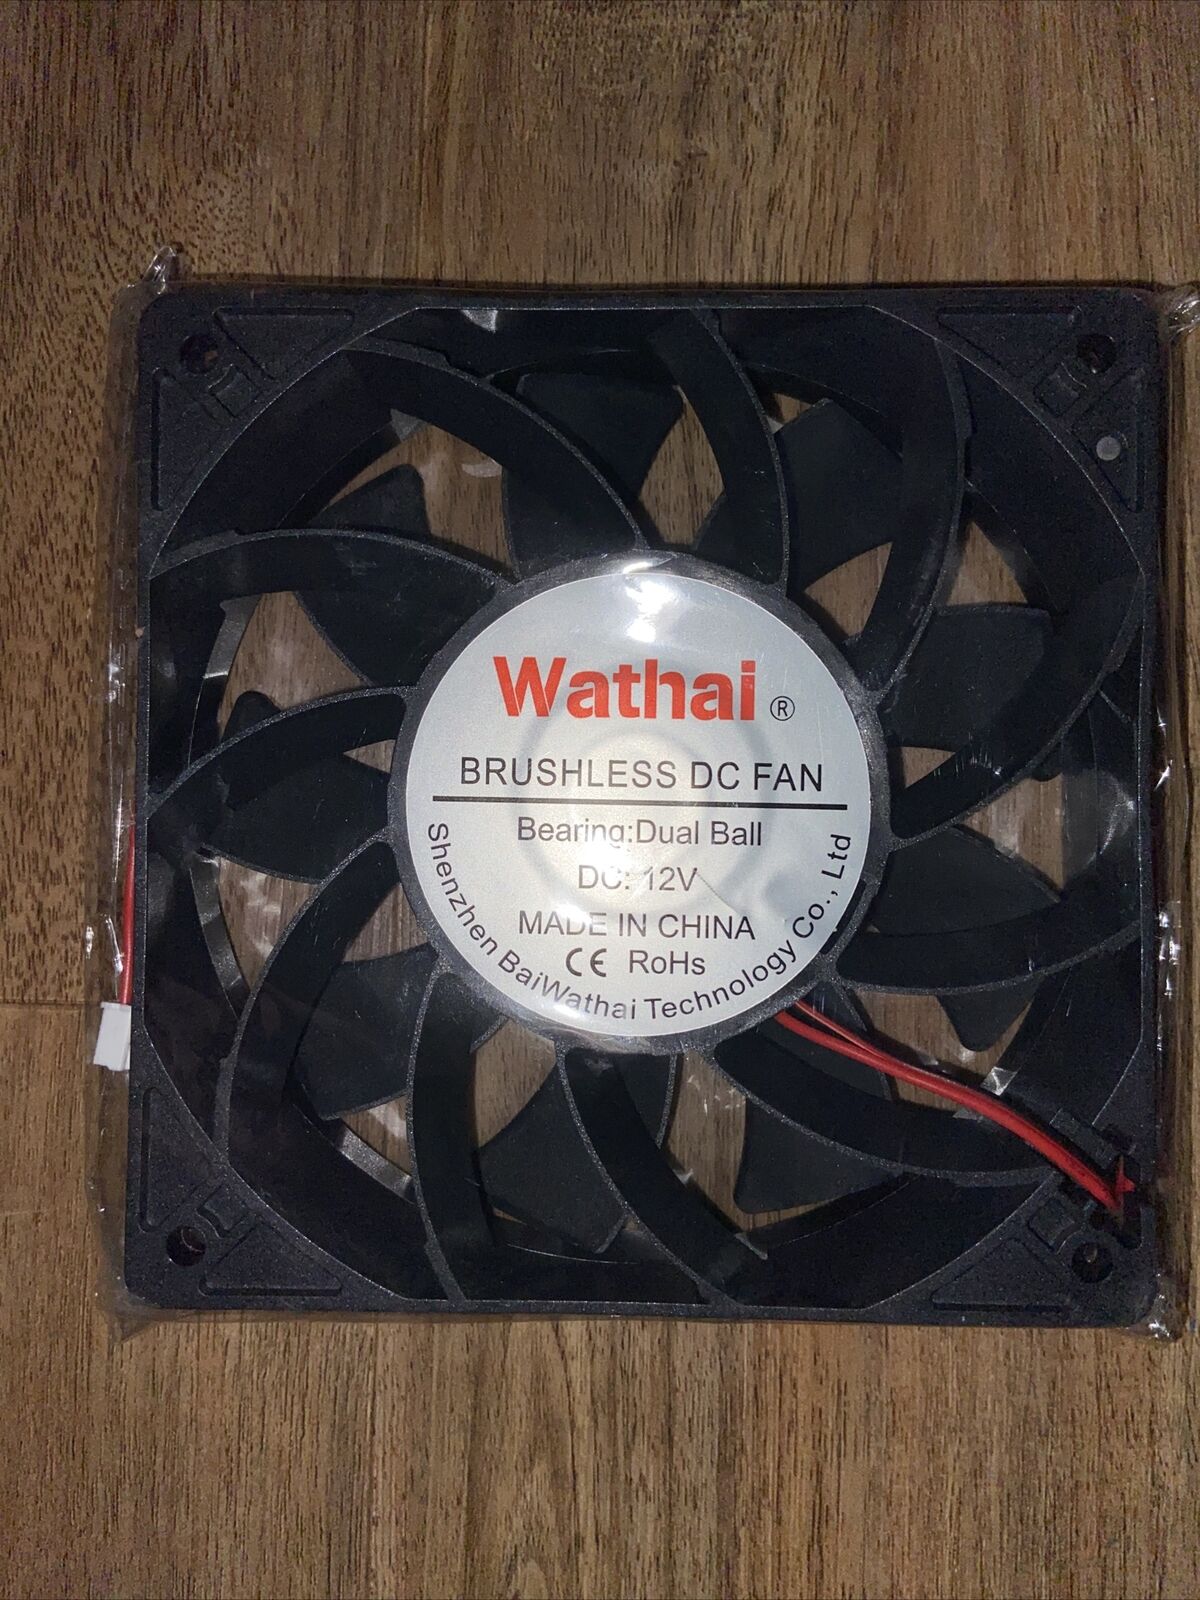 Wathai Brushless DC Fan Bearing Dual Ball DC 12V